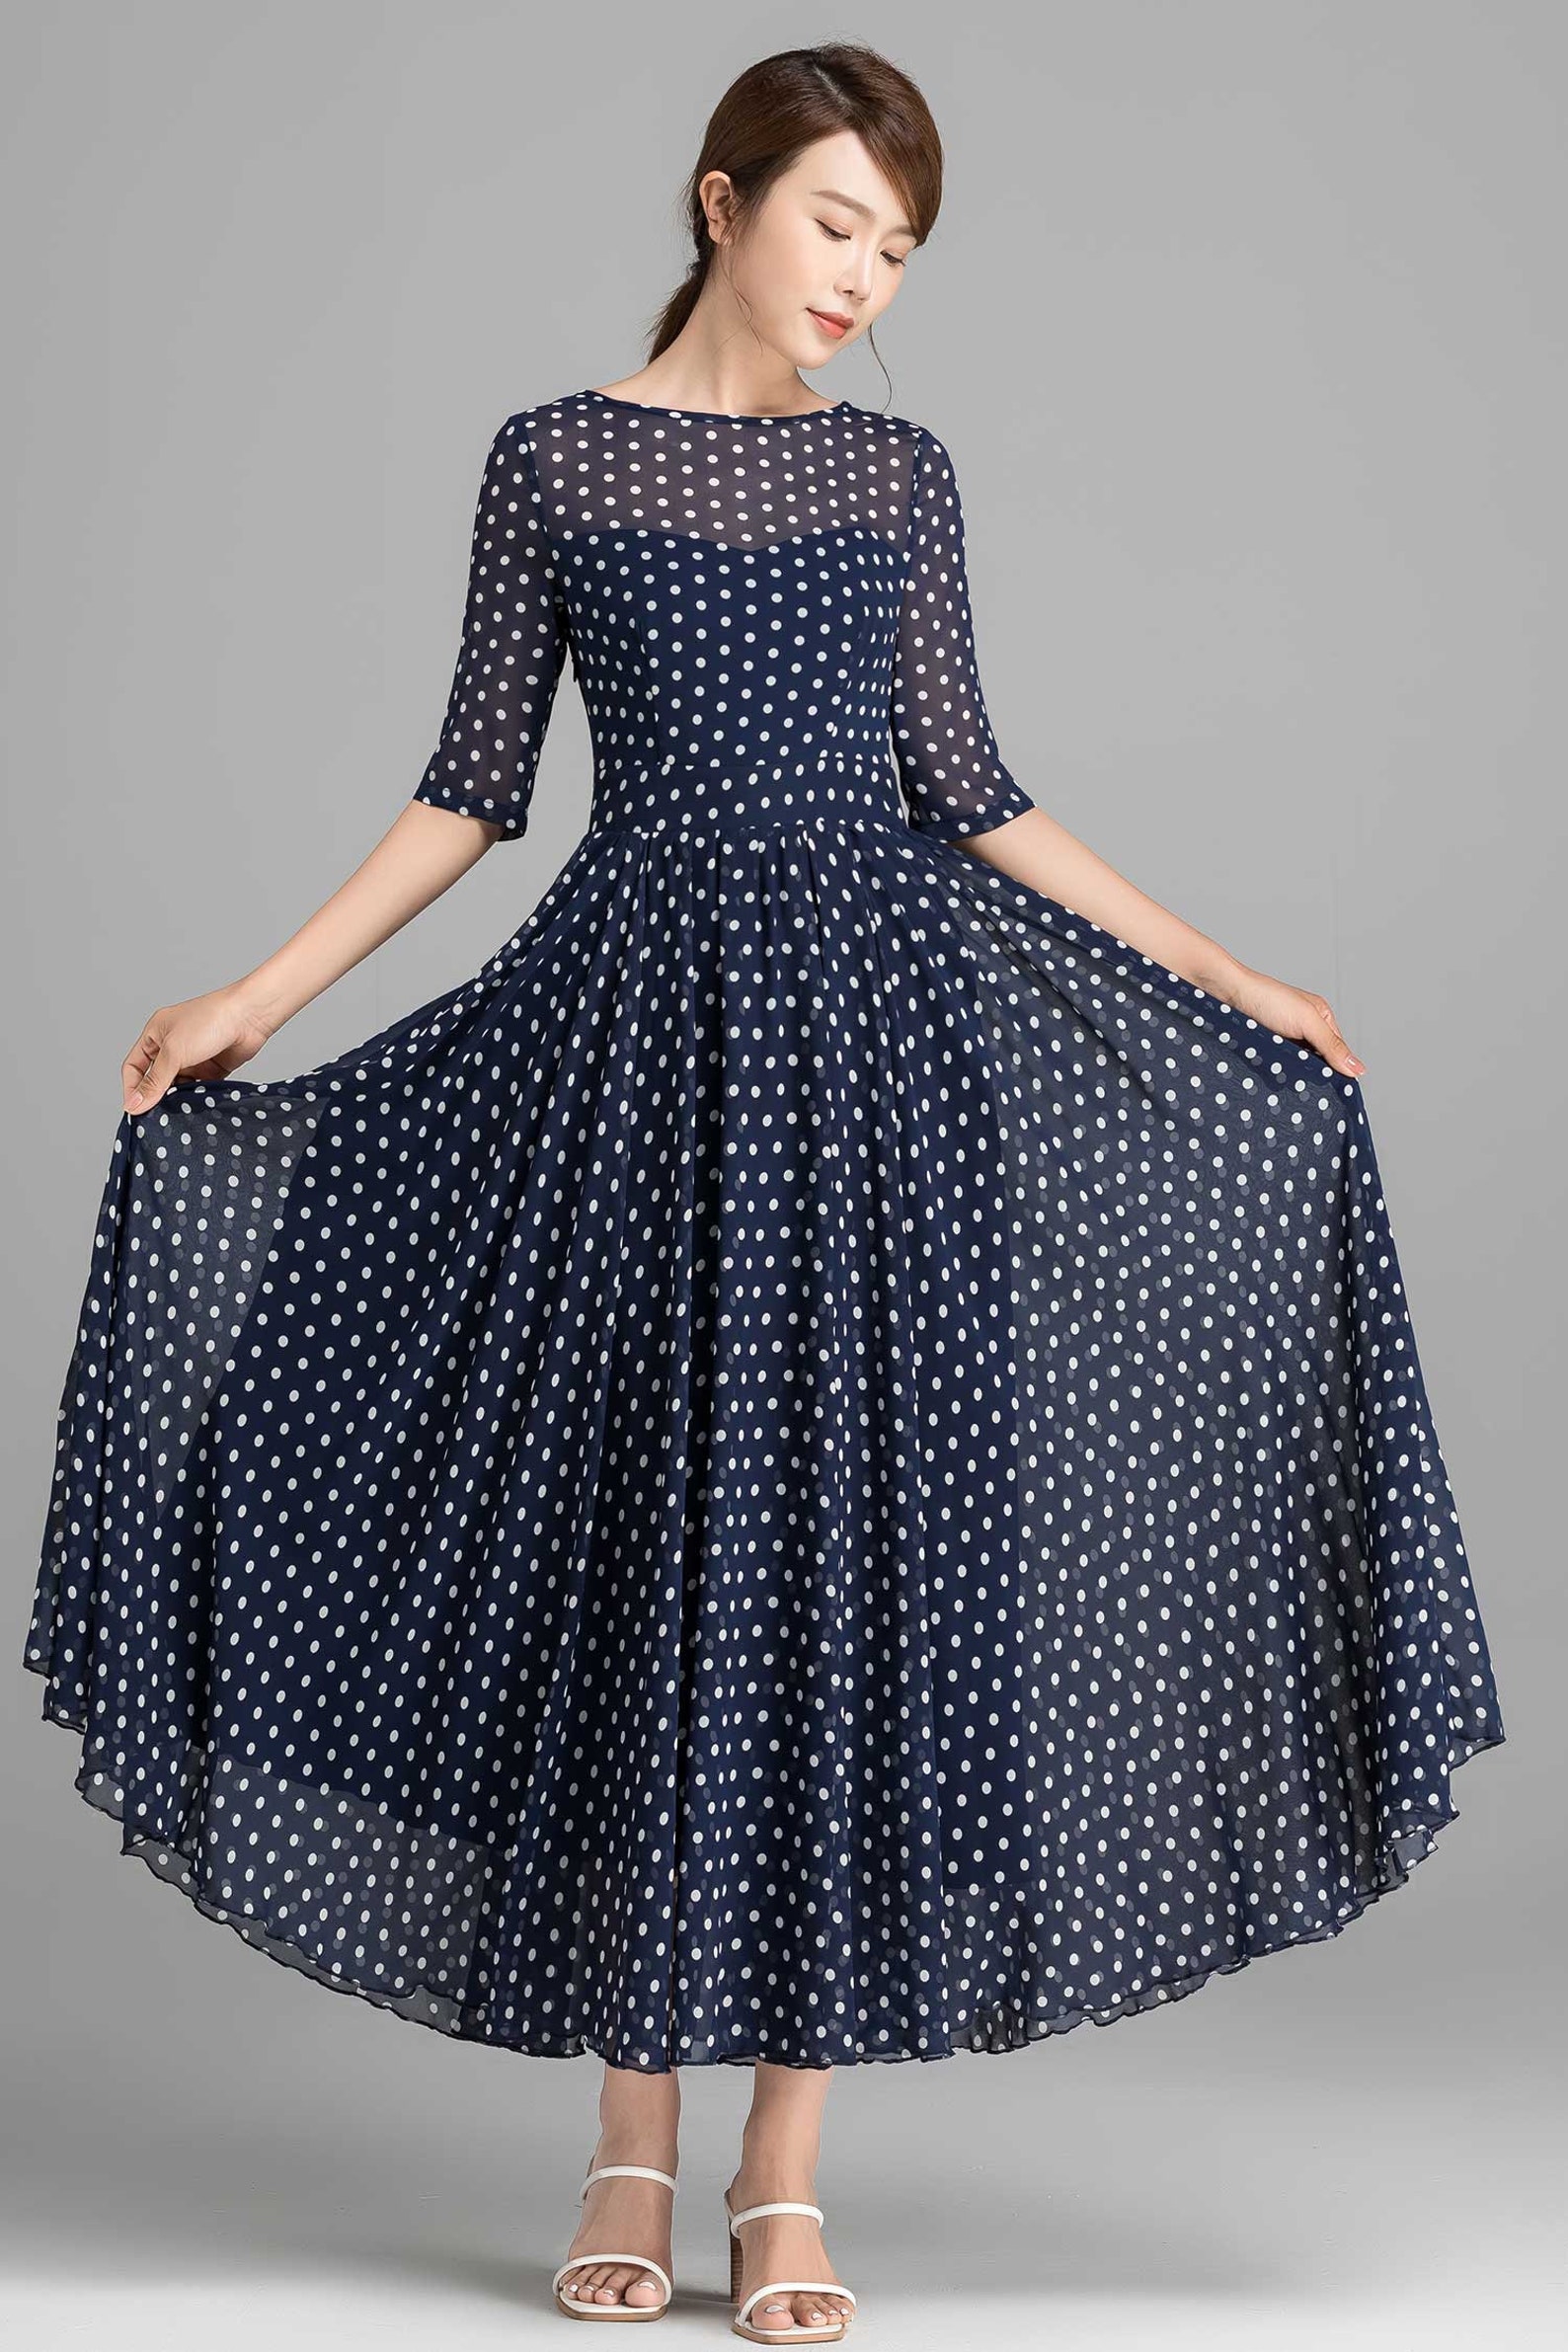 Blue and White Polka Dot Maxi Dress Fit and Flare Chiffon | Etsy